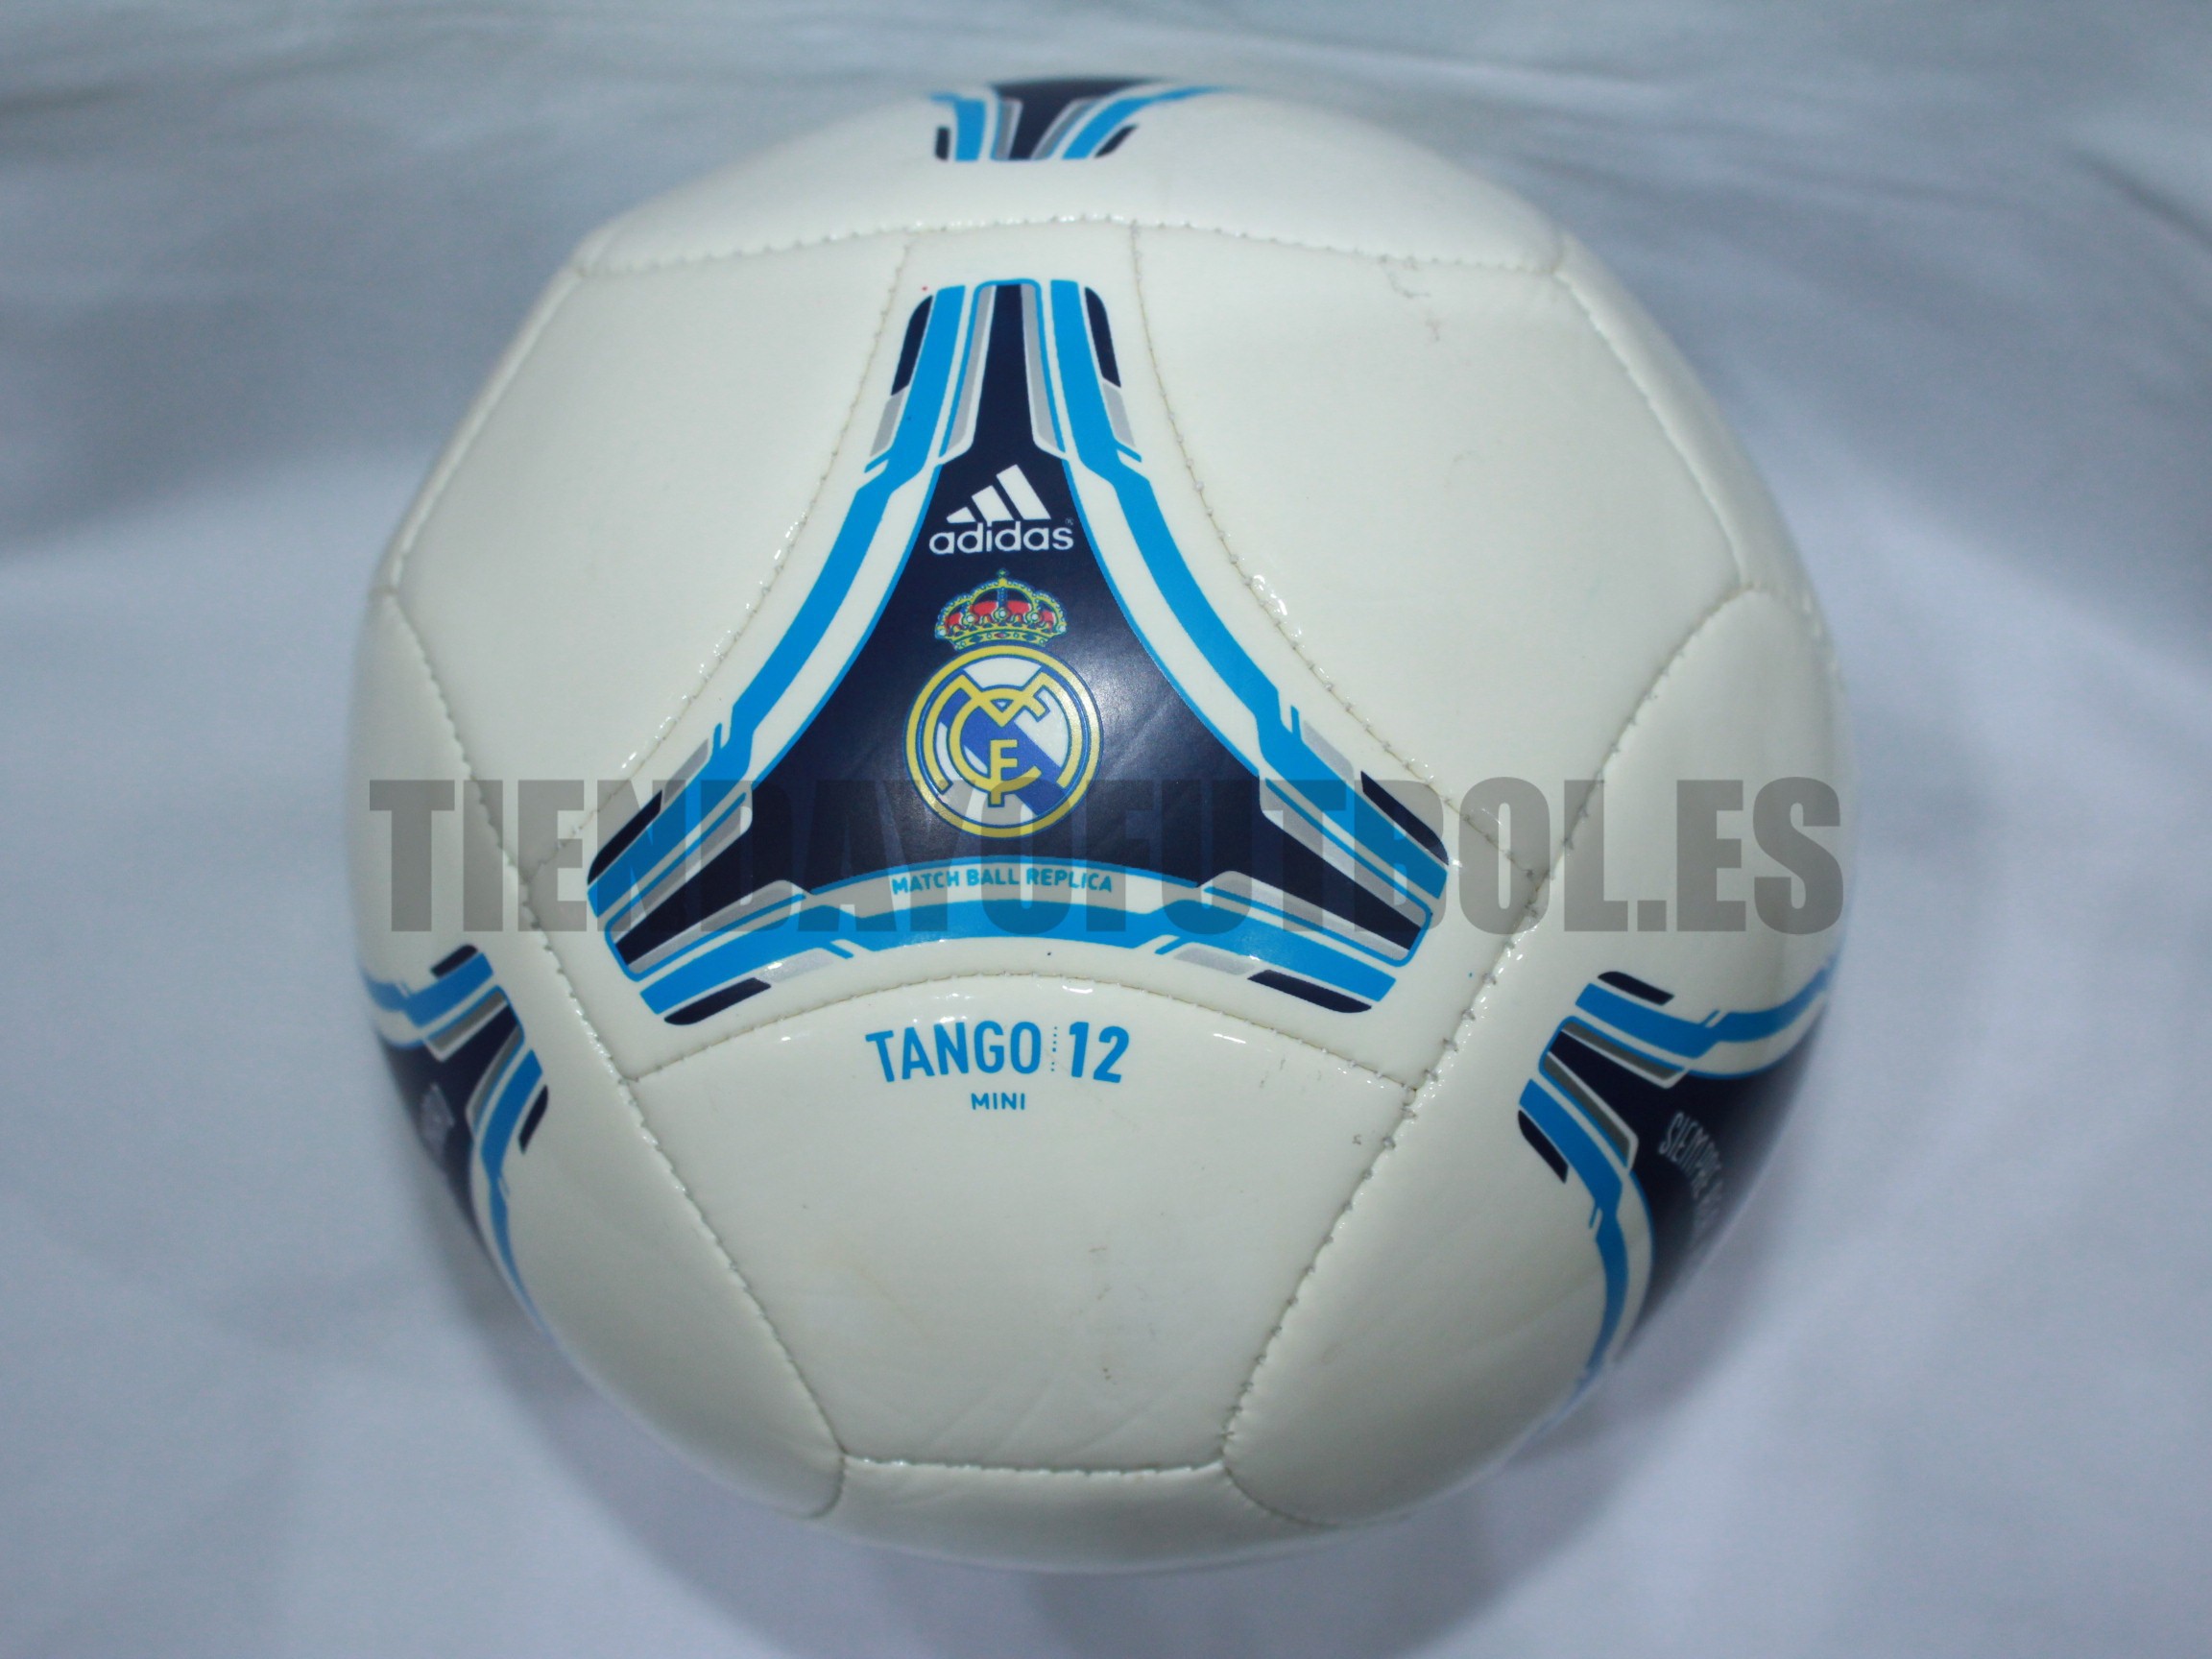 Balón Real Madrid Azul